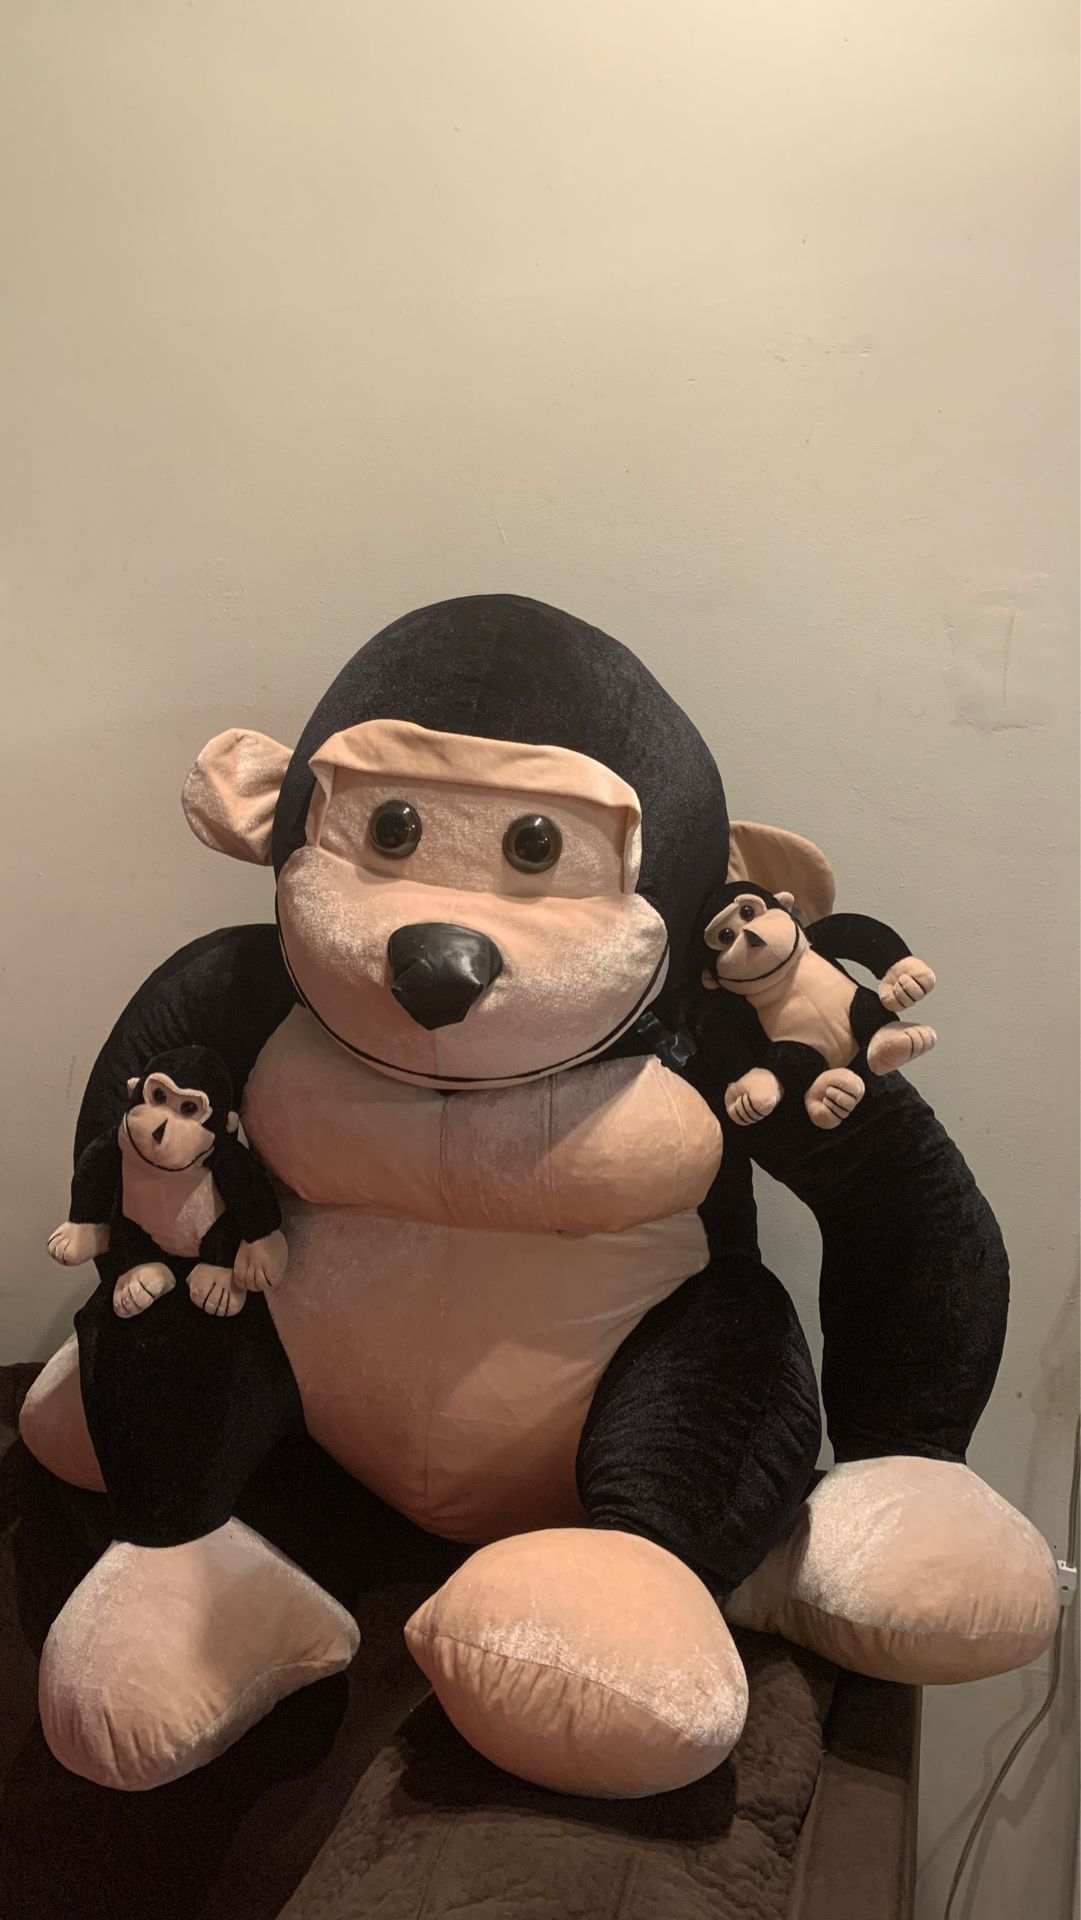 3ft tall Monkey stuffed animal with 2 small monkeys